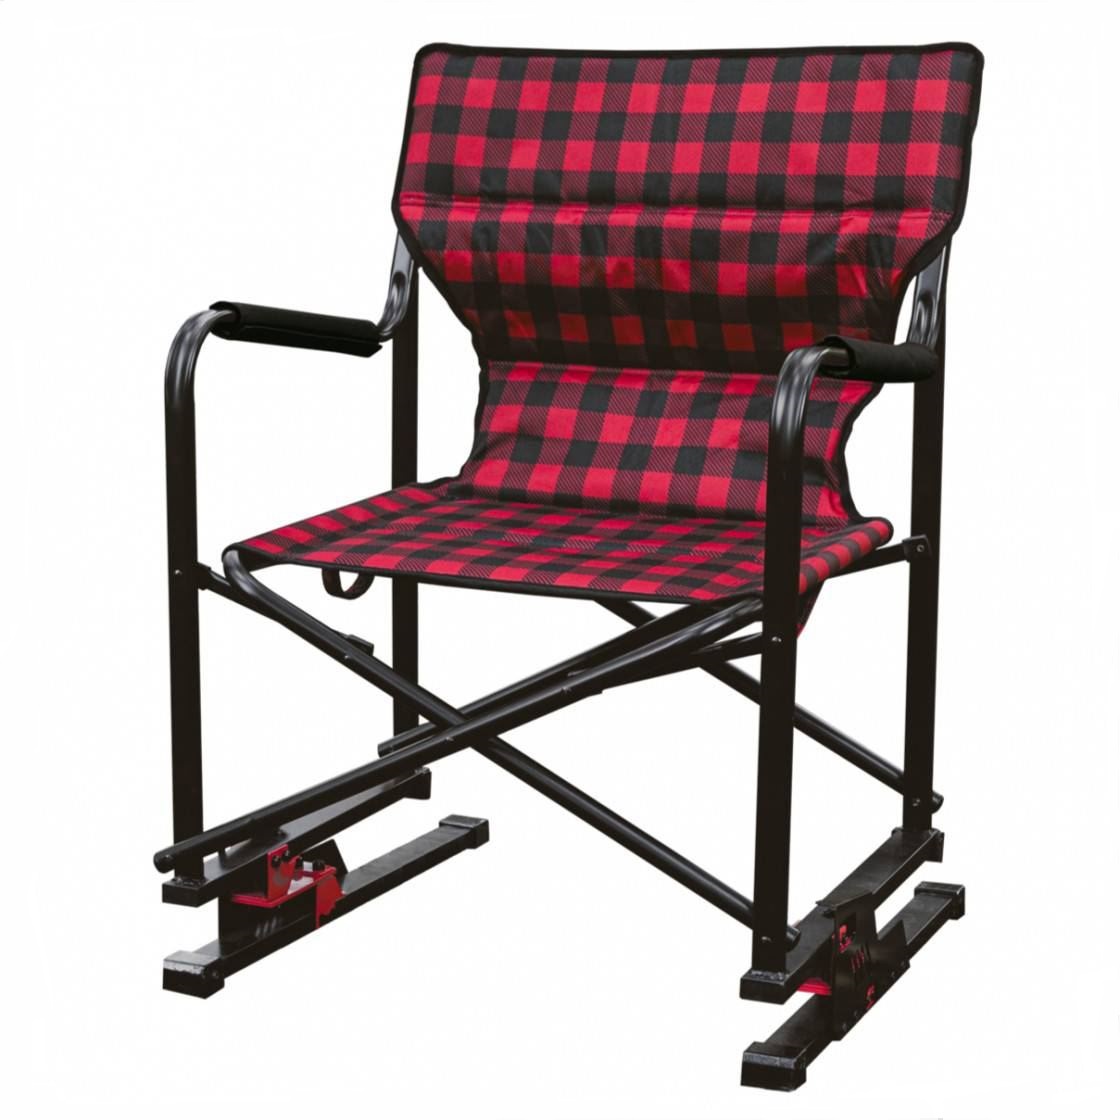 Spring Bear Chair Red Plaid